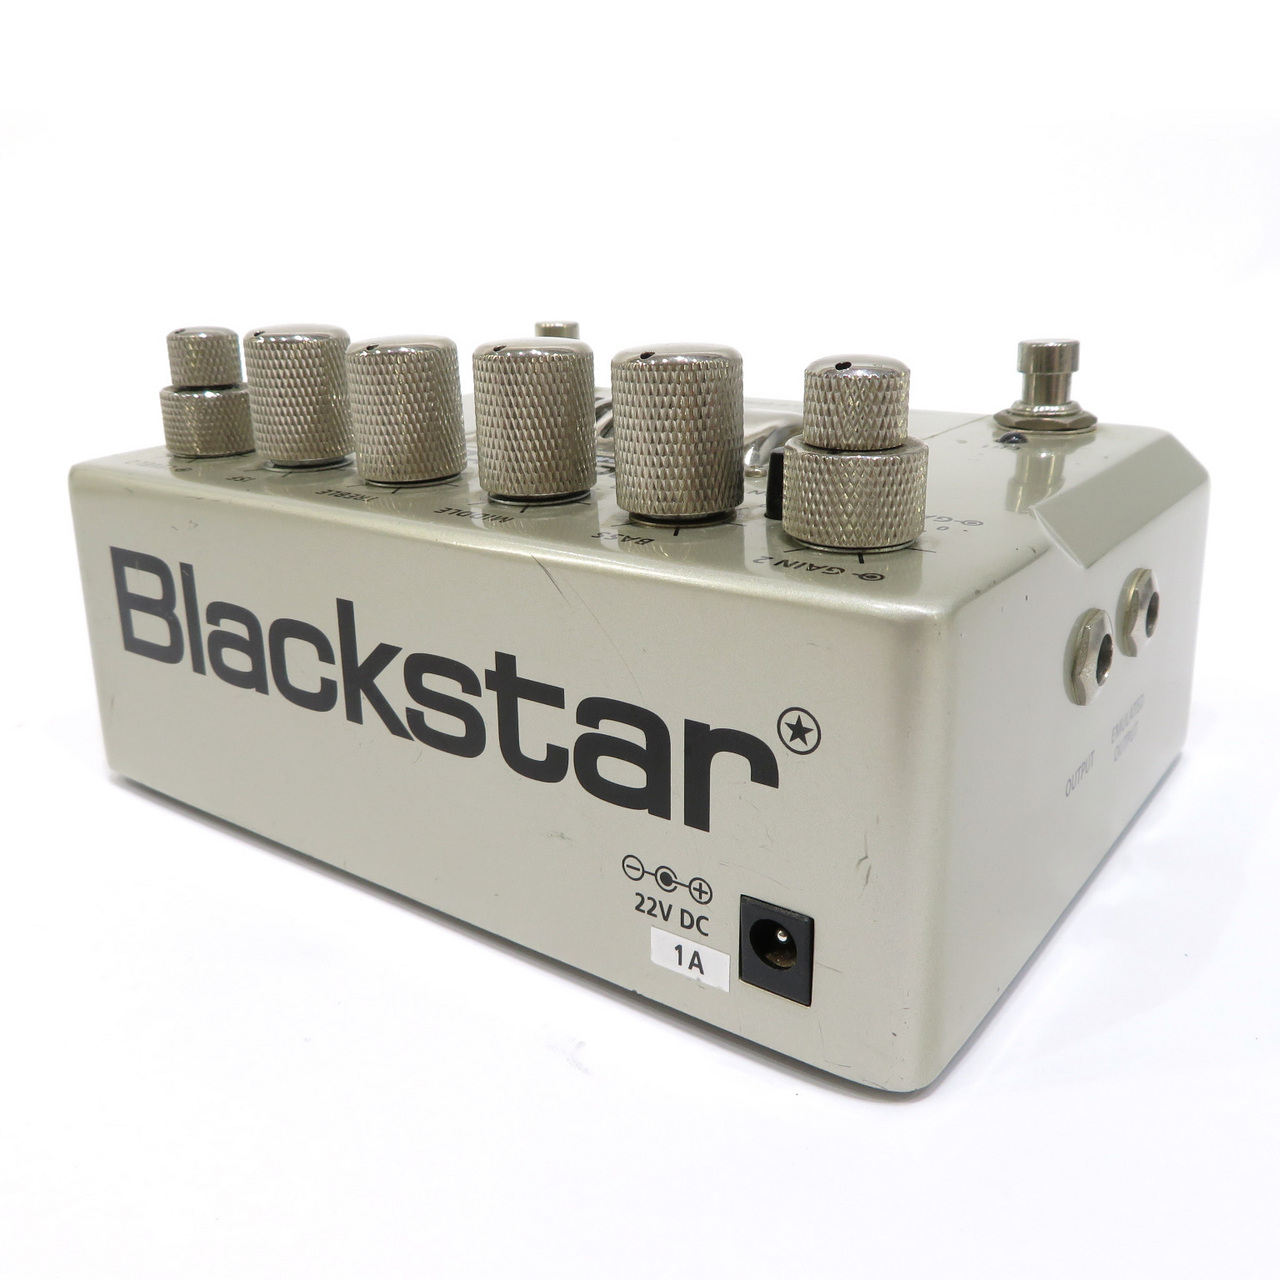 Blackstar HT-METAL改造品